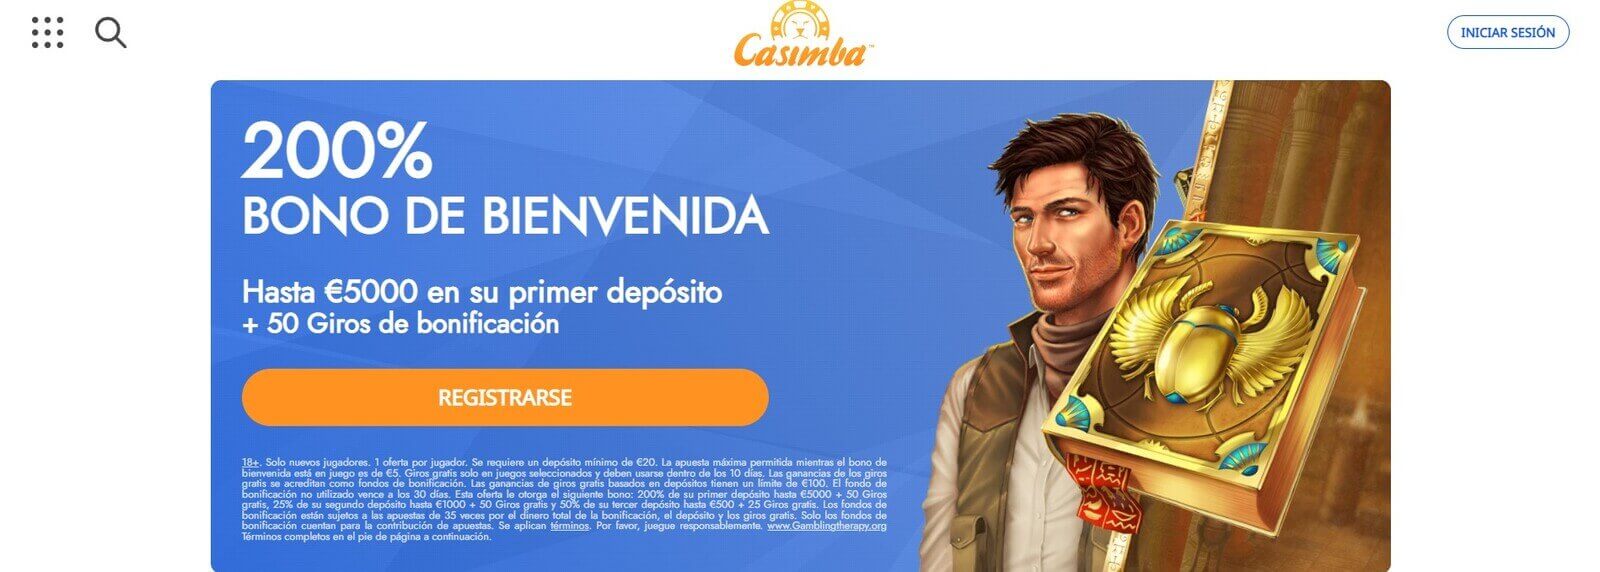 Página web de Casimba Casino 